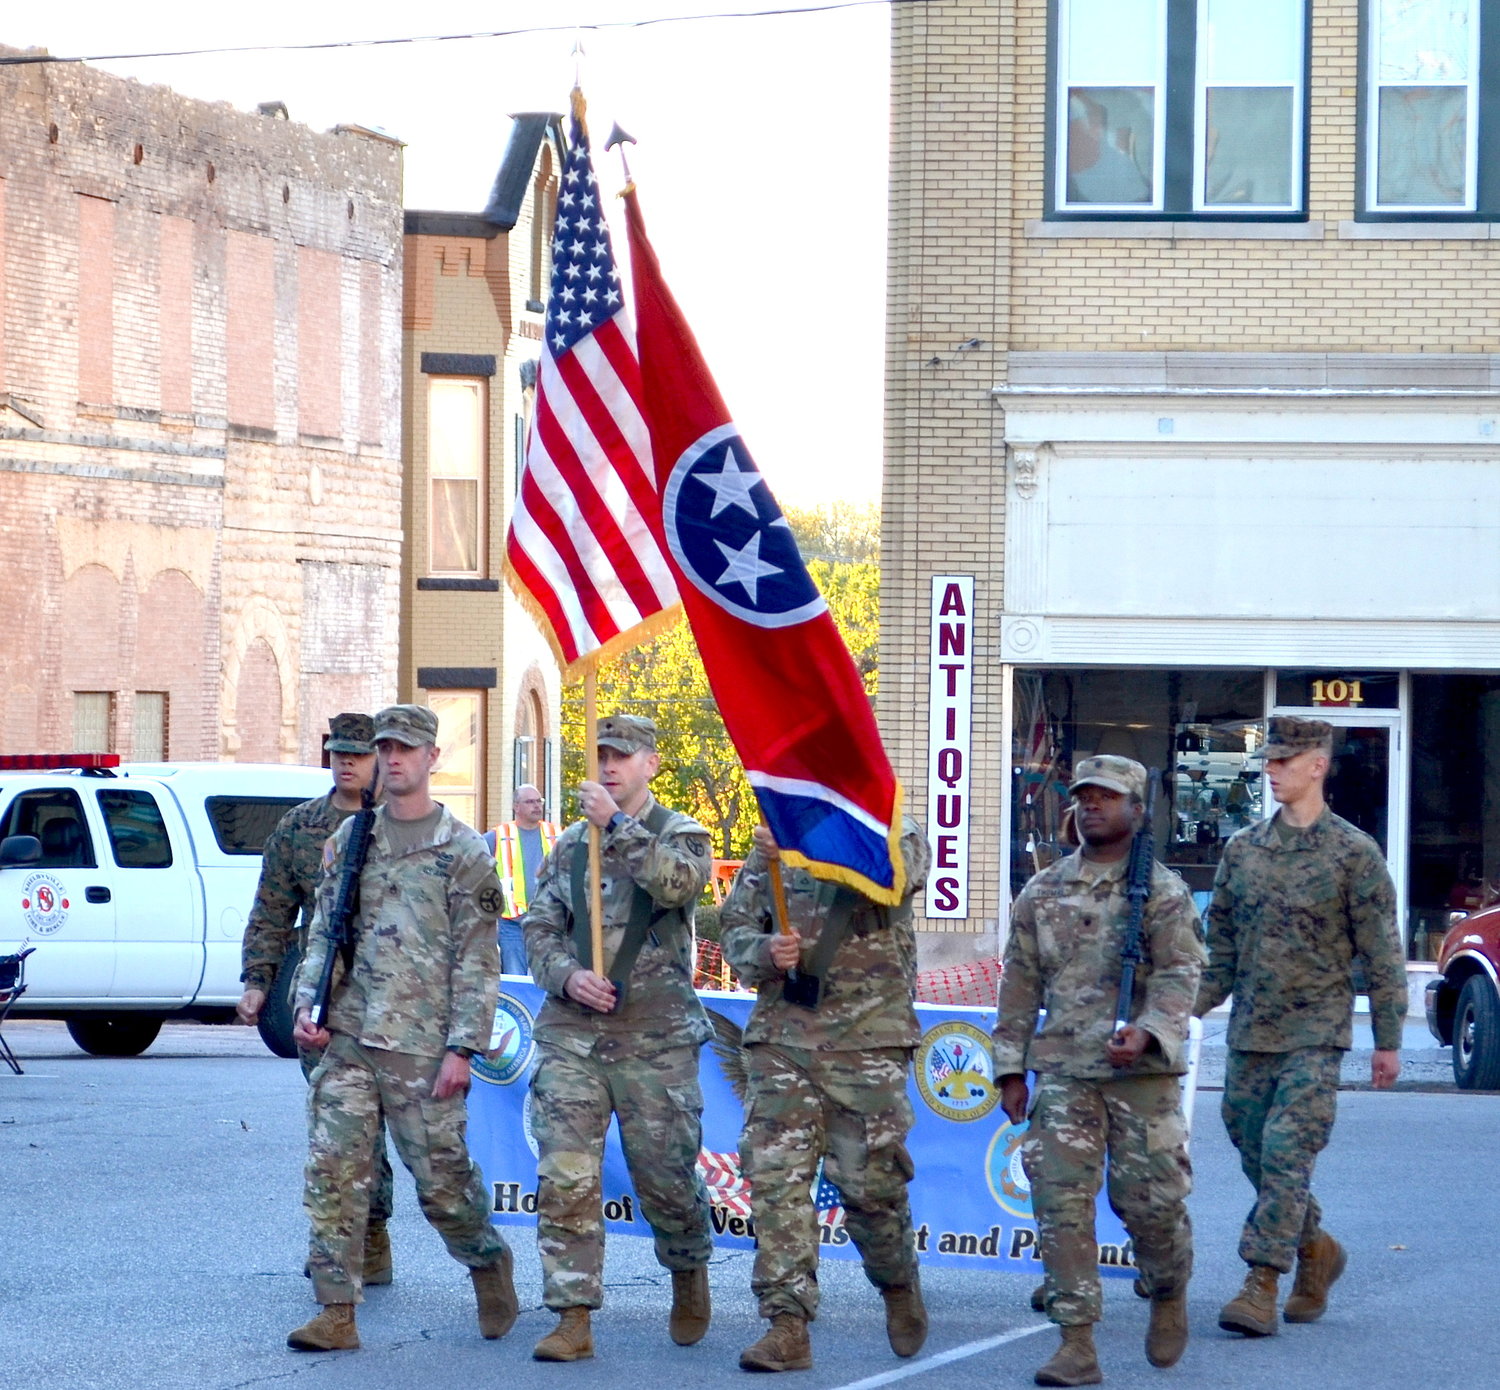 Veterans Day Parade on Saturday.